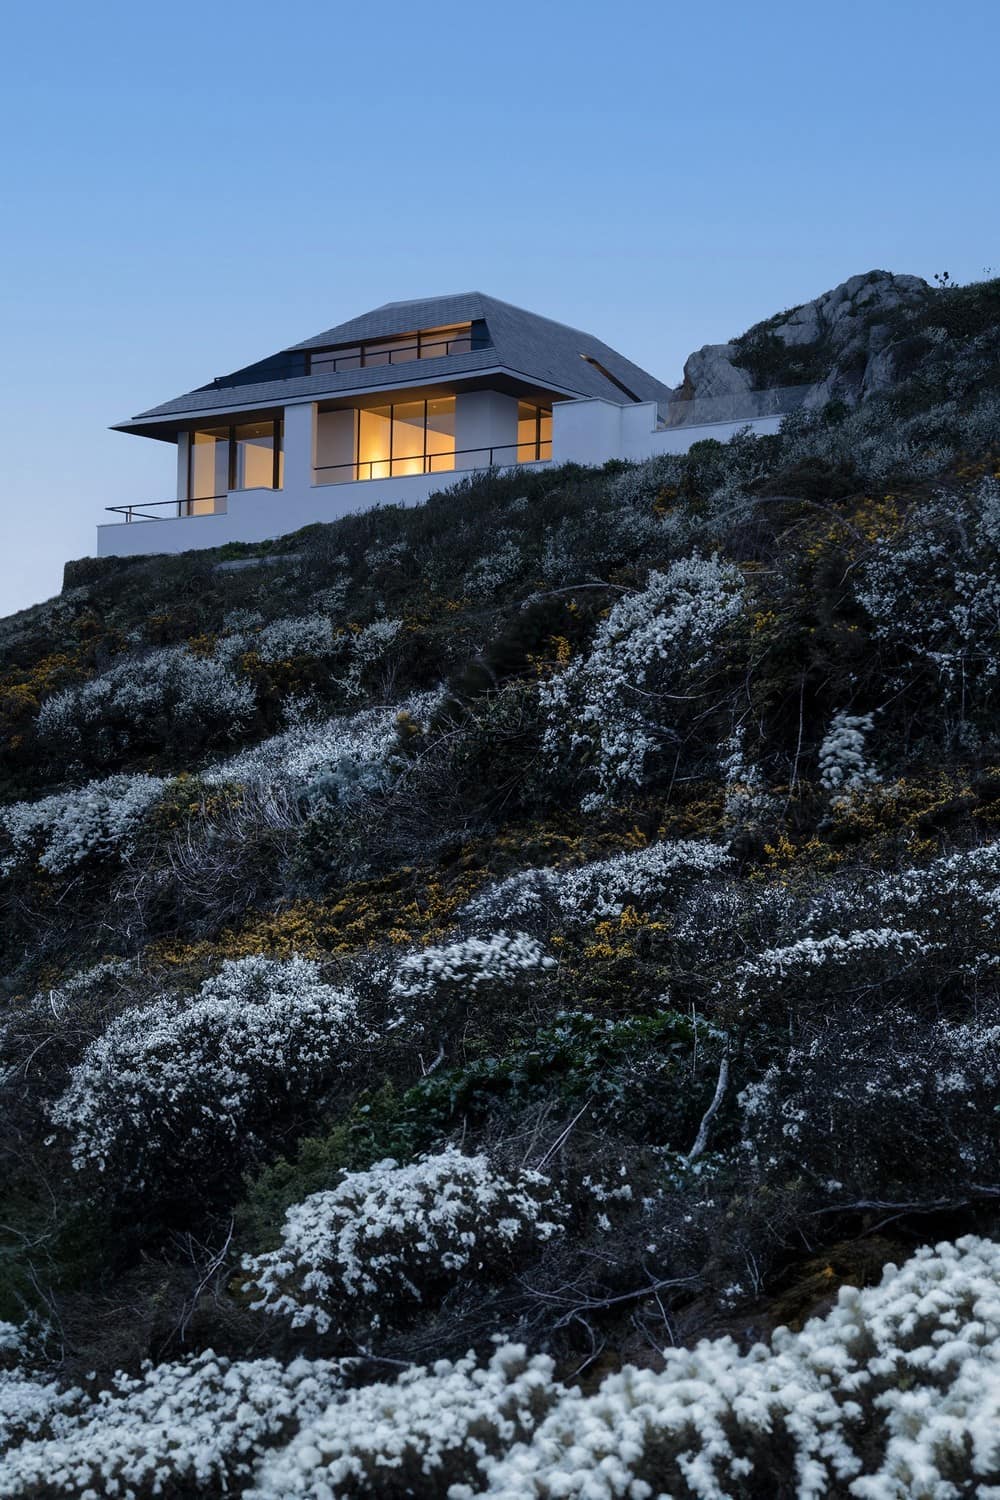 Cove Ridge House / Coffey Architects